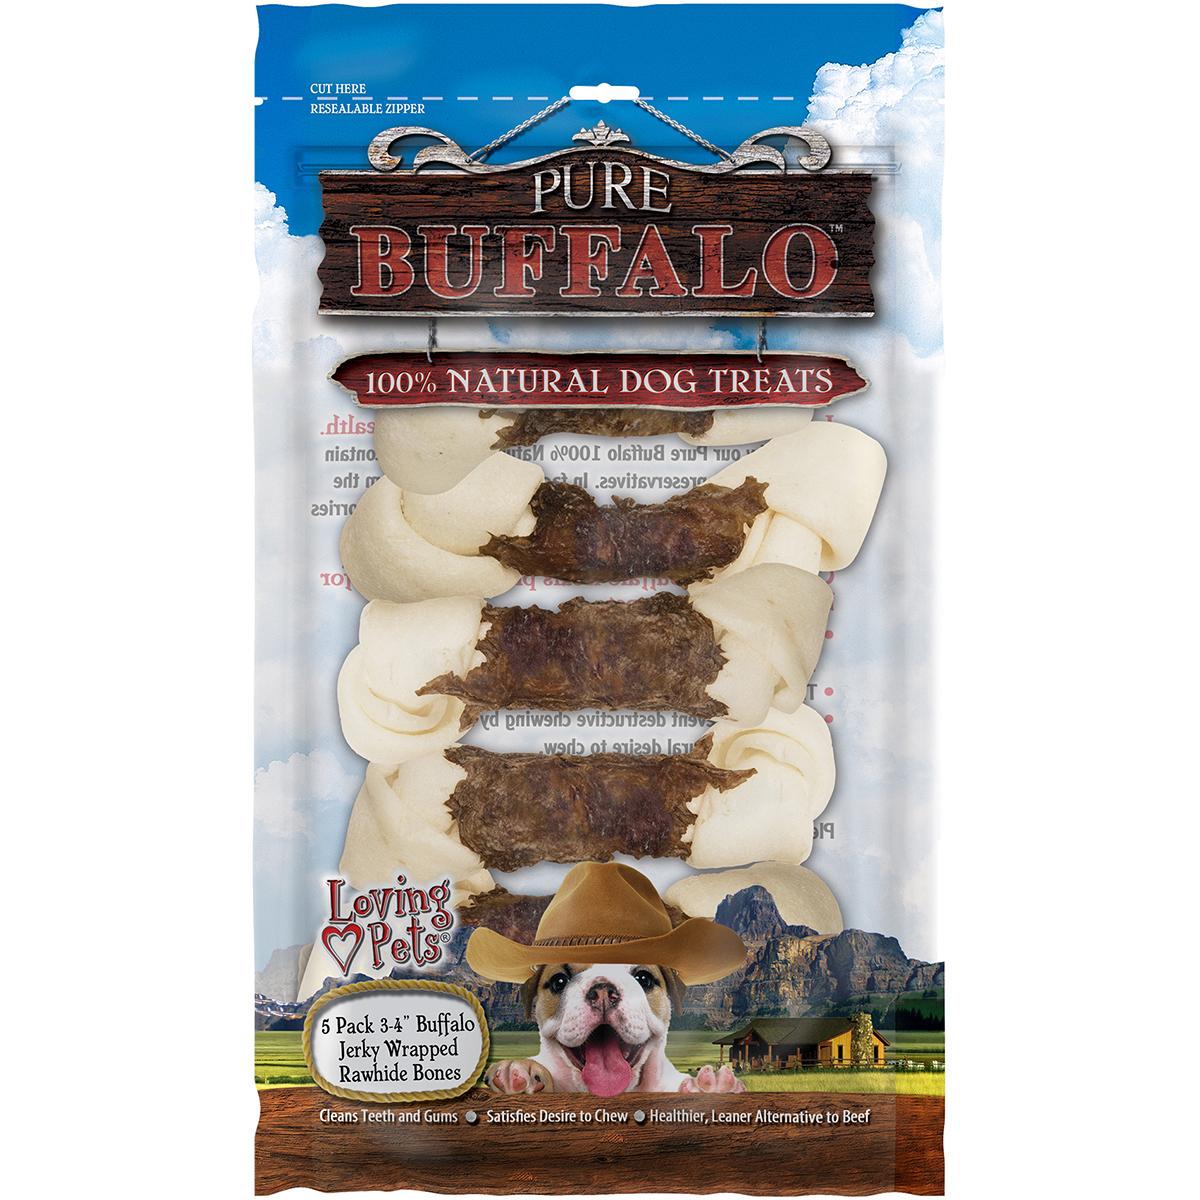 Lp5680 Pure Buffalo Buffalo Jerky Wrapped Rawhide Bone, Pack Of 5 - 3-4 In.